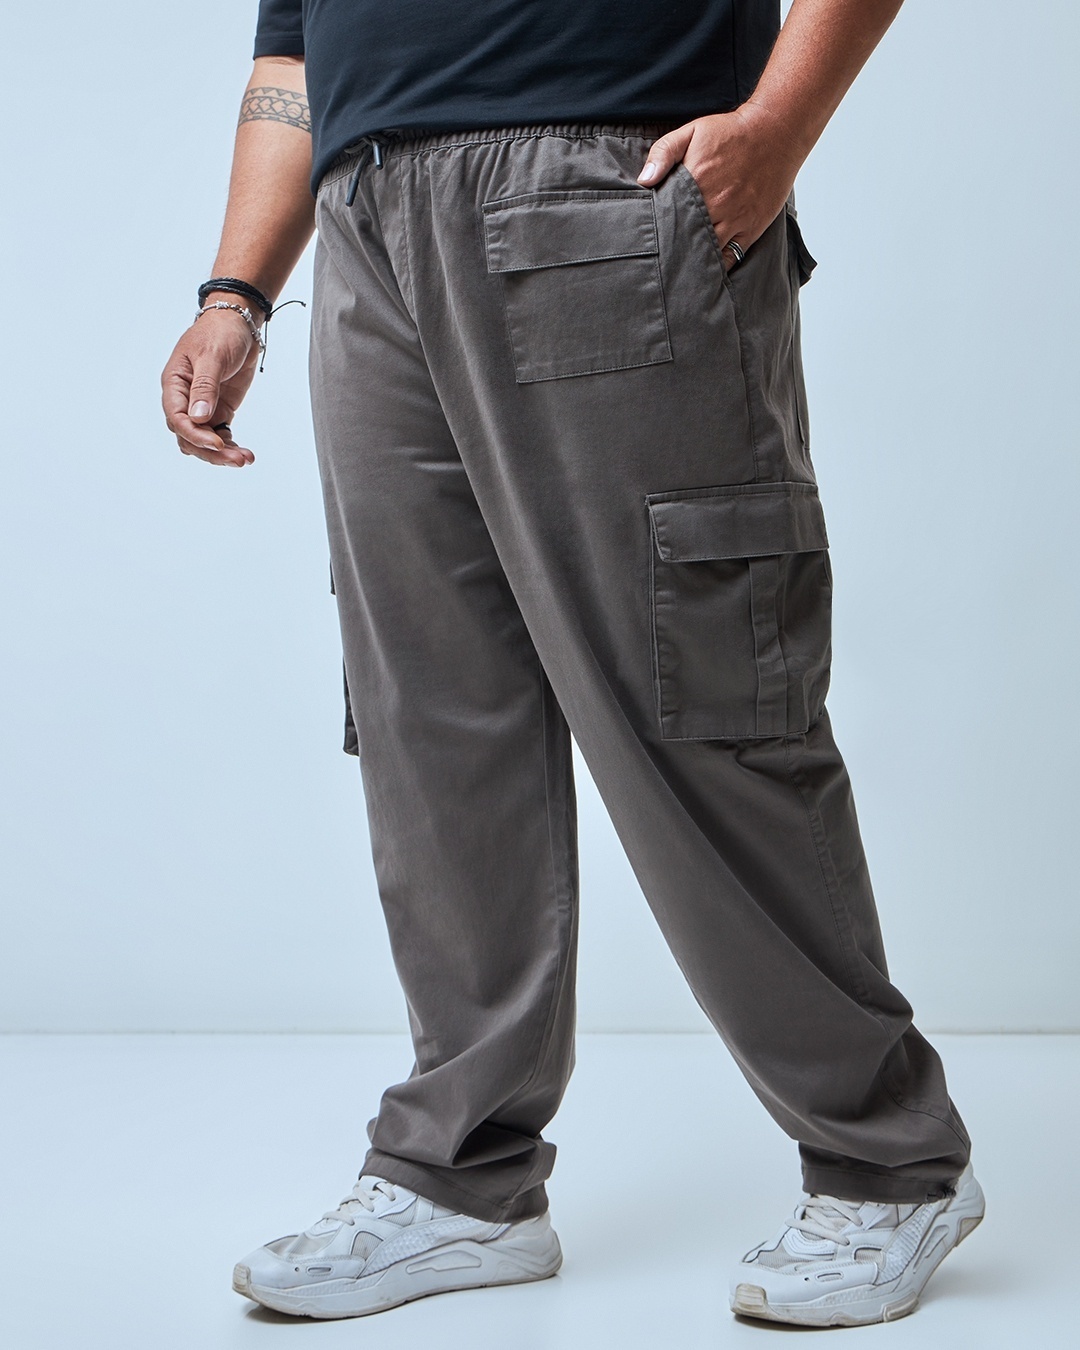 How to Style Cargo Pants: Plus Size OOTD | Video published by  Kaseywithakayy | Lemon8